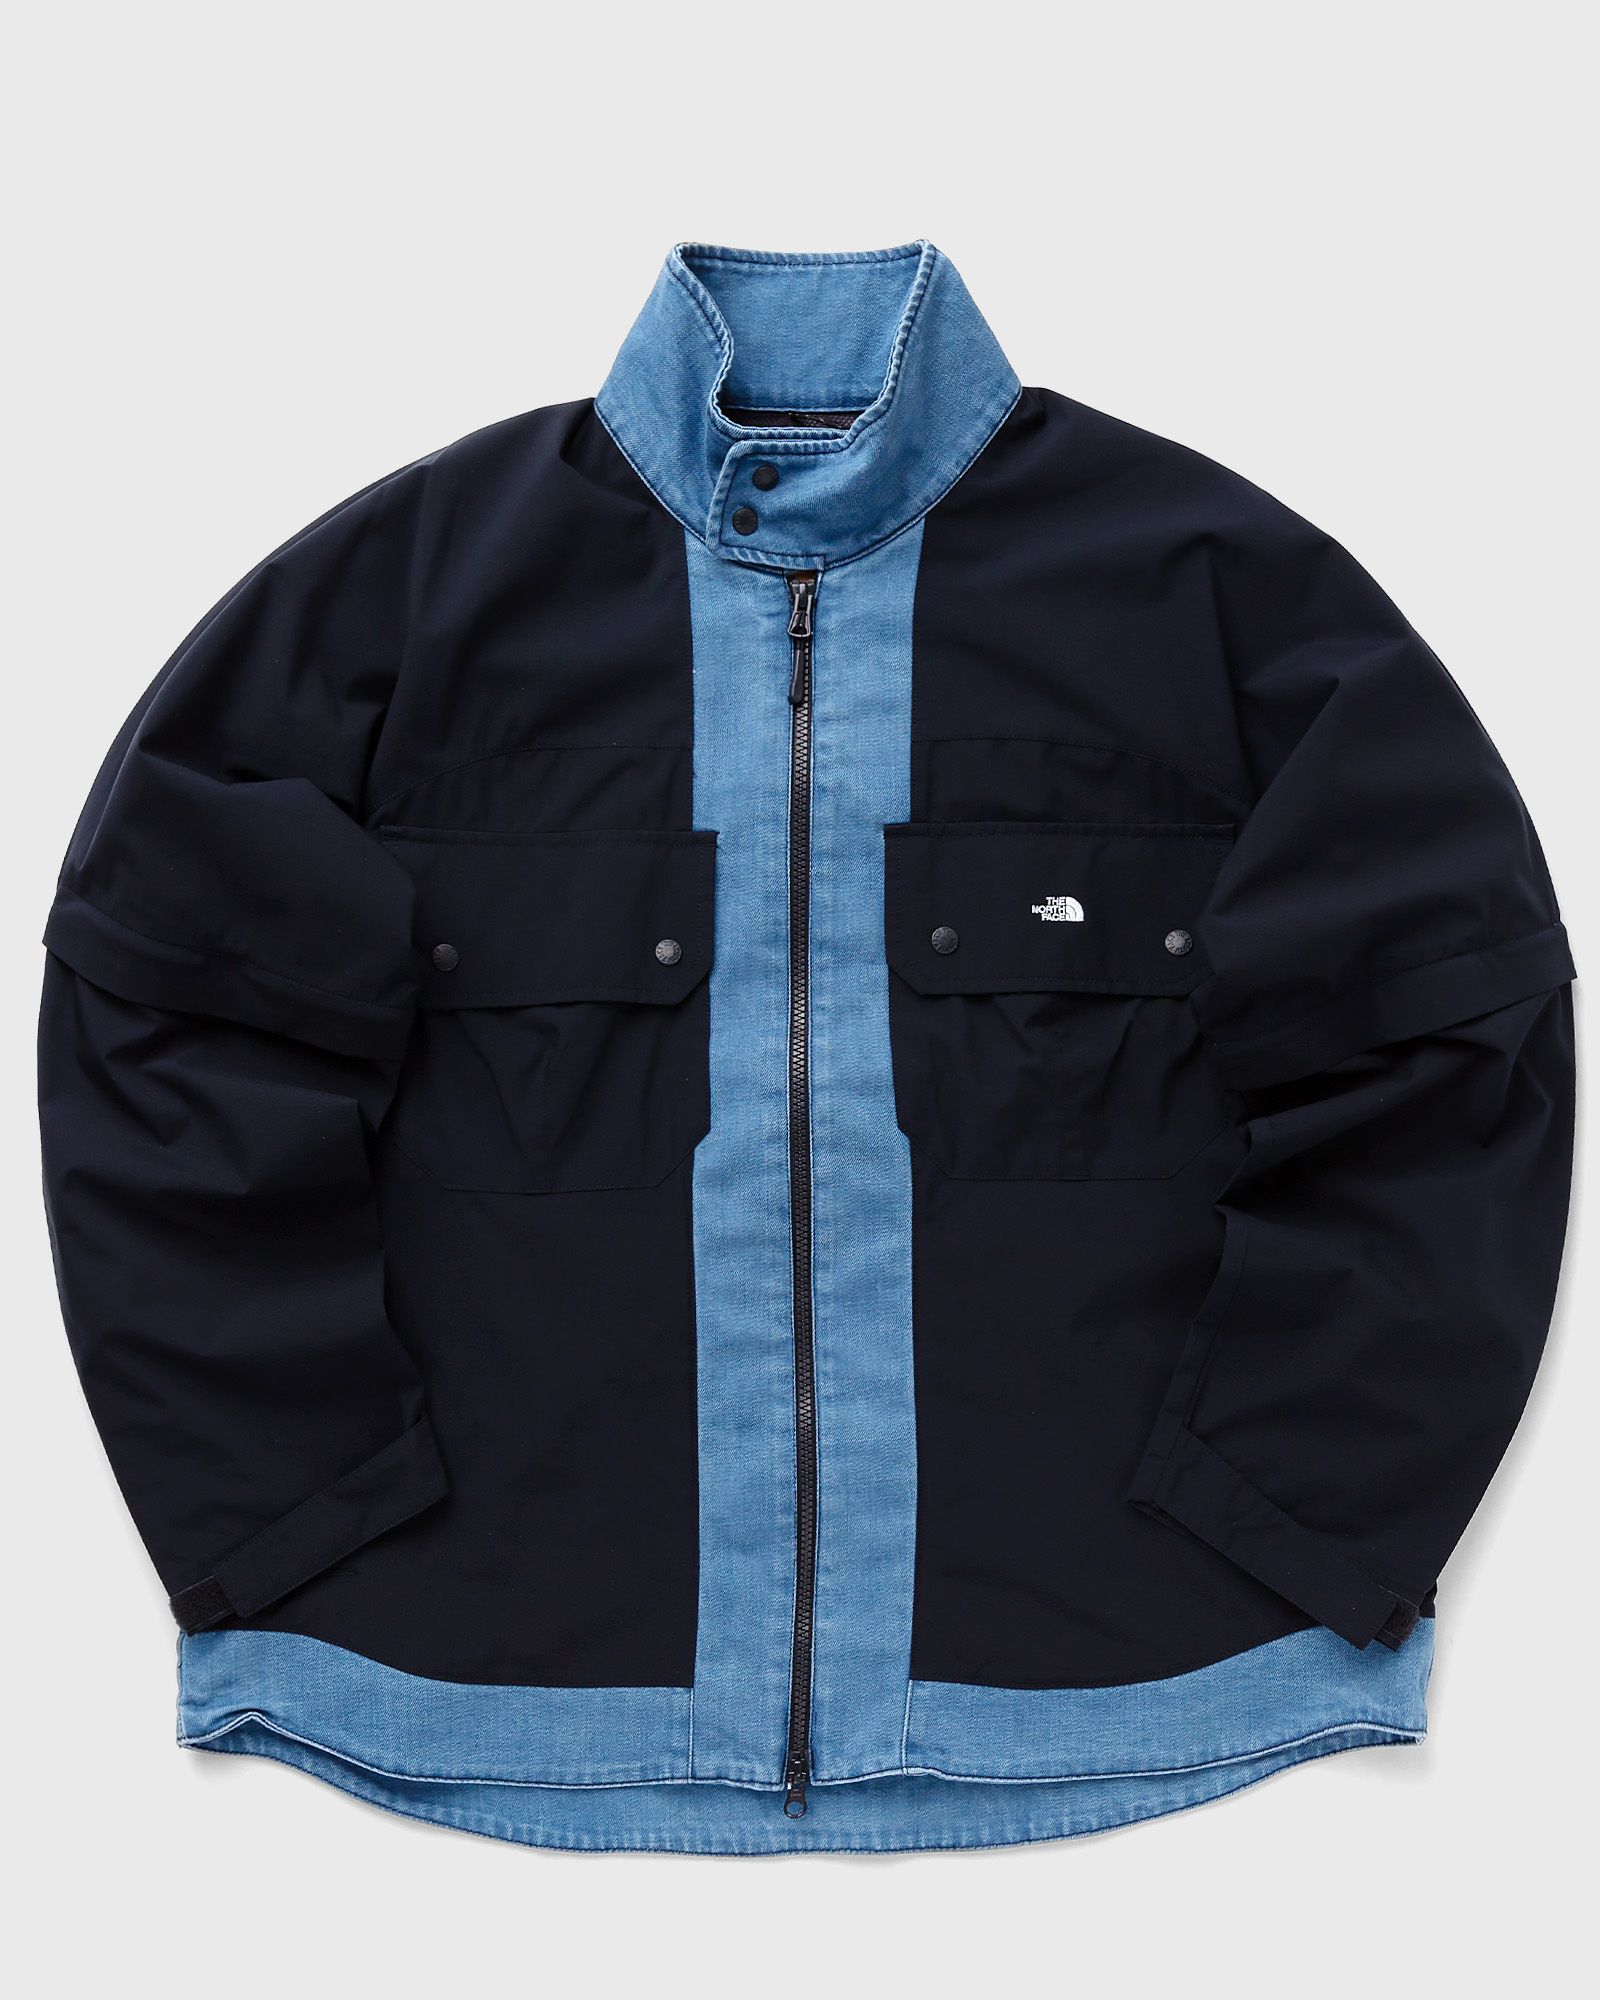 The North Face - denim shirt jacket men denim jackets|shell jackets black|blue in größe:m